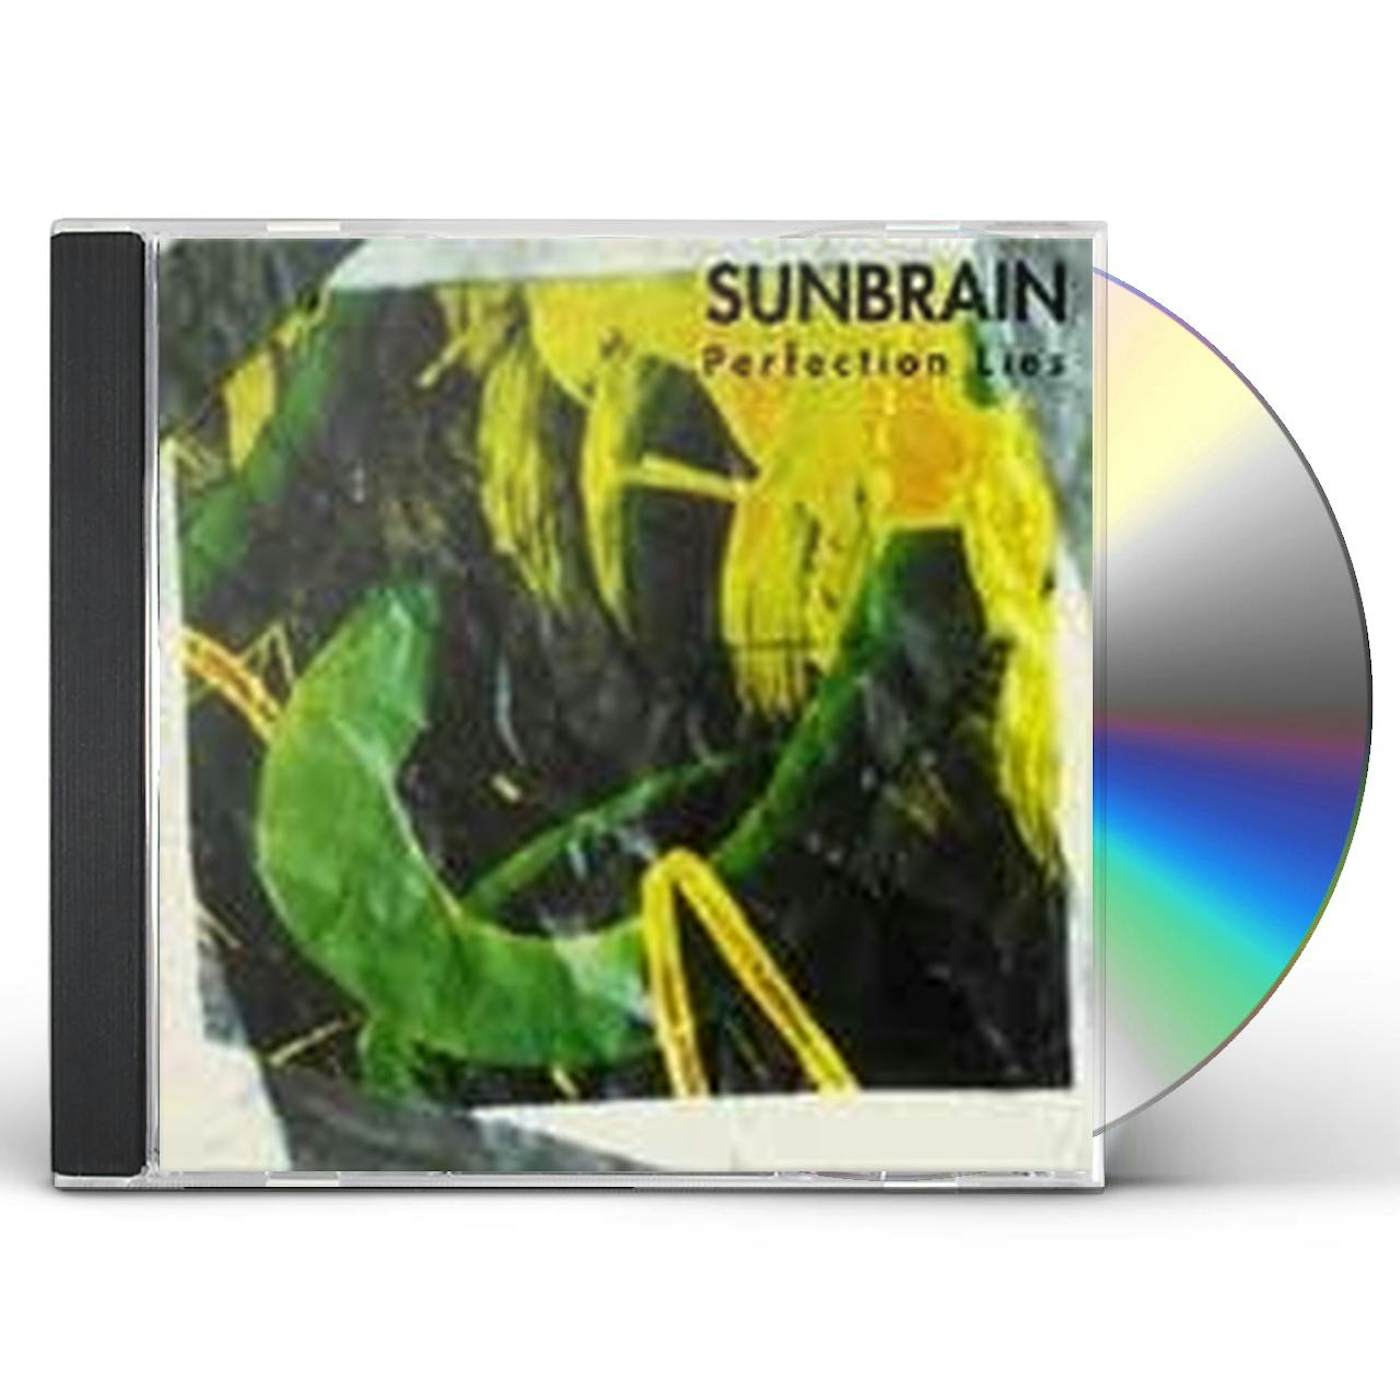 Sunbrain PERFECTION LIES CD